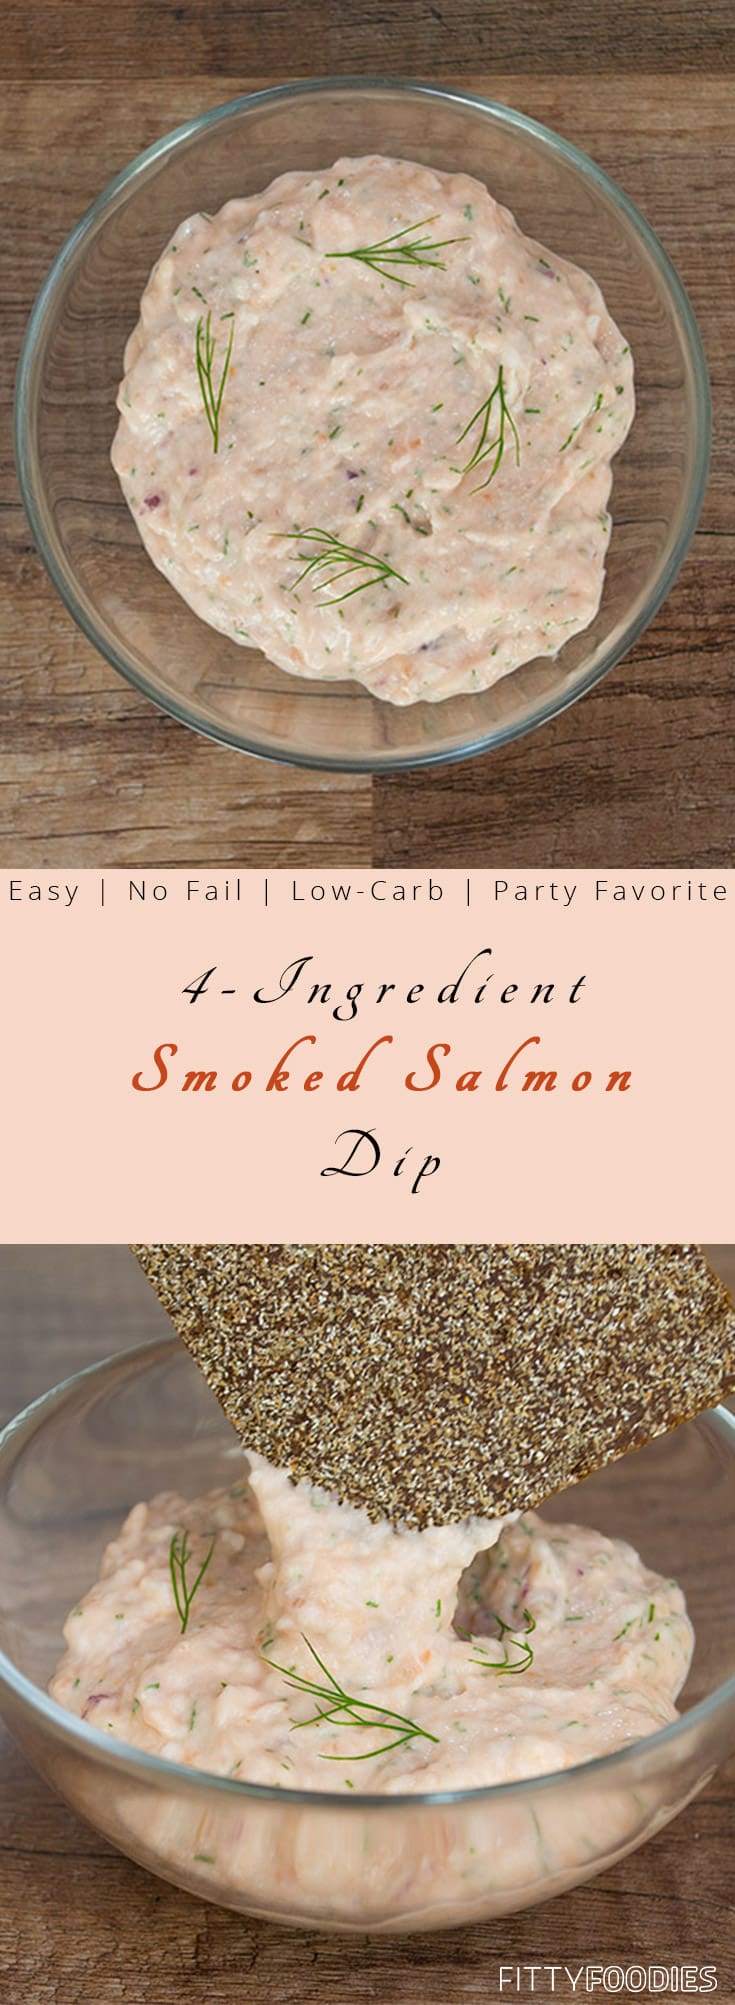 [picture of 4-Ingredient Smoked Salmon Dip]